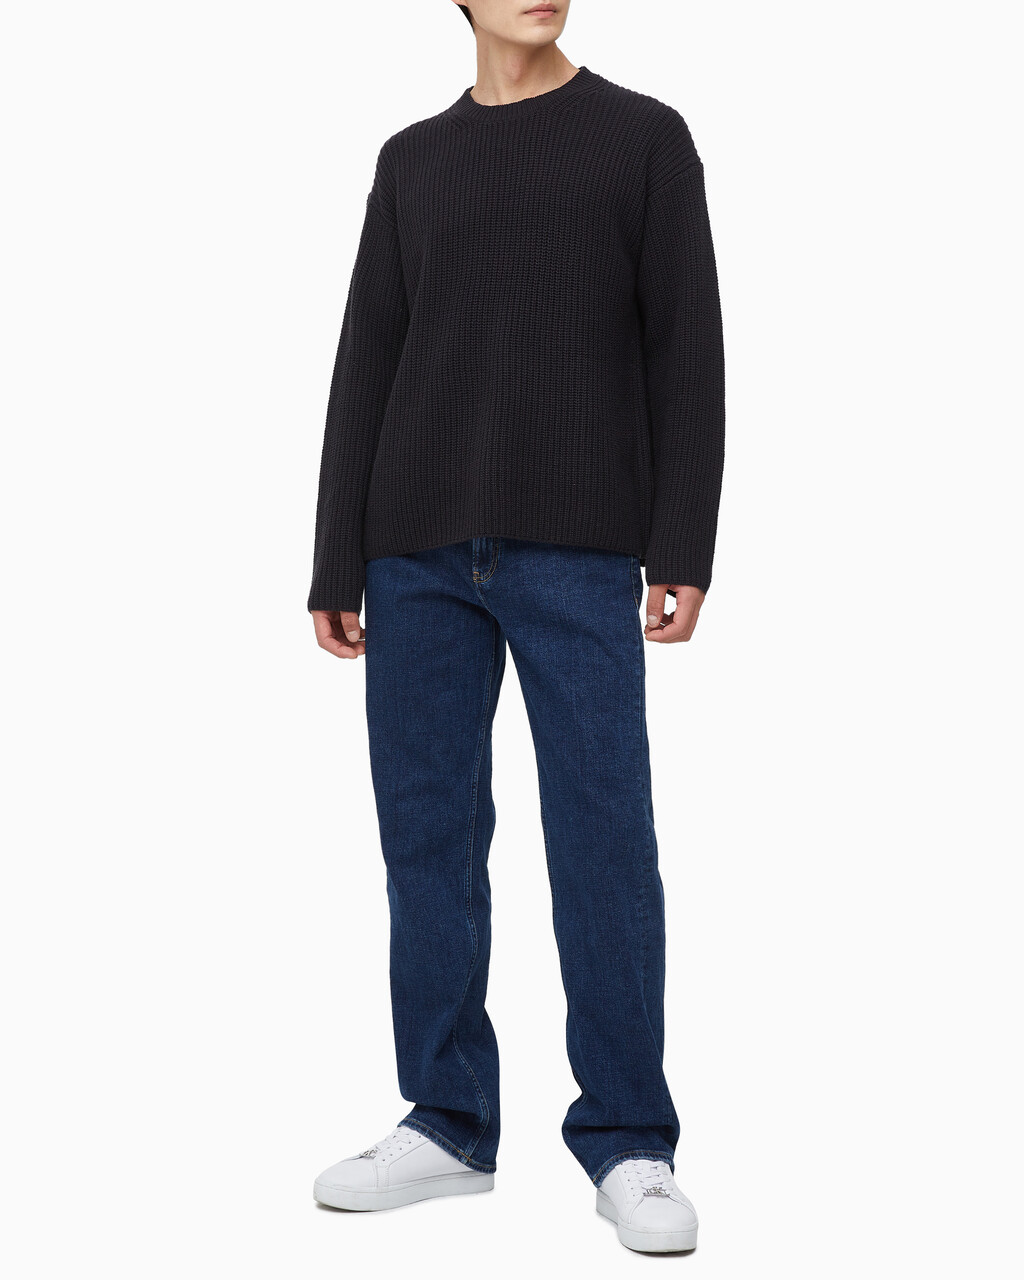 Buy 남성 롱슬리브 크루넥 스웨터 in color BLACK BEAUTY